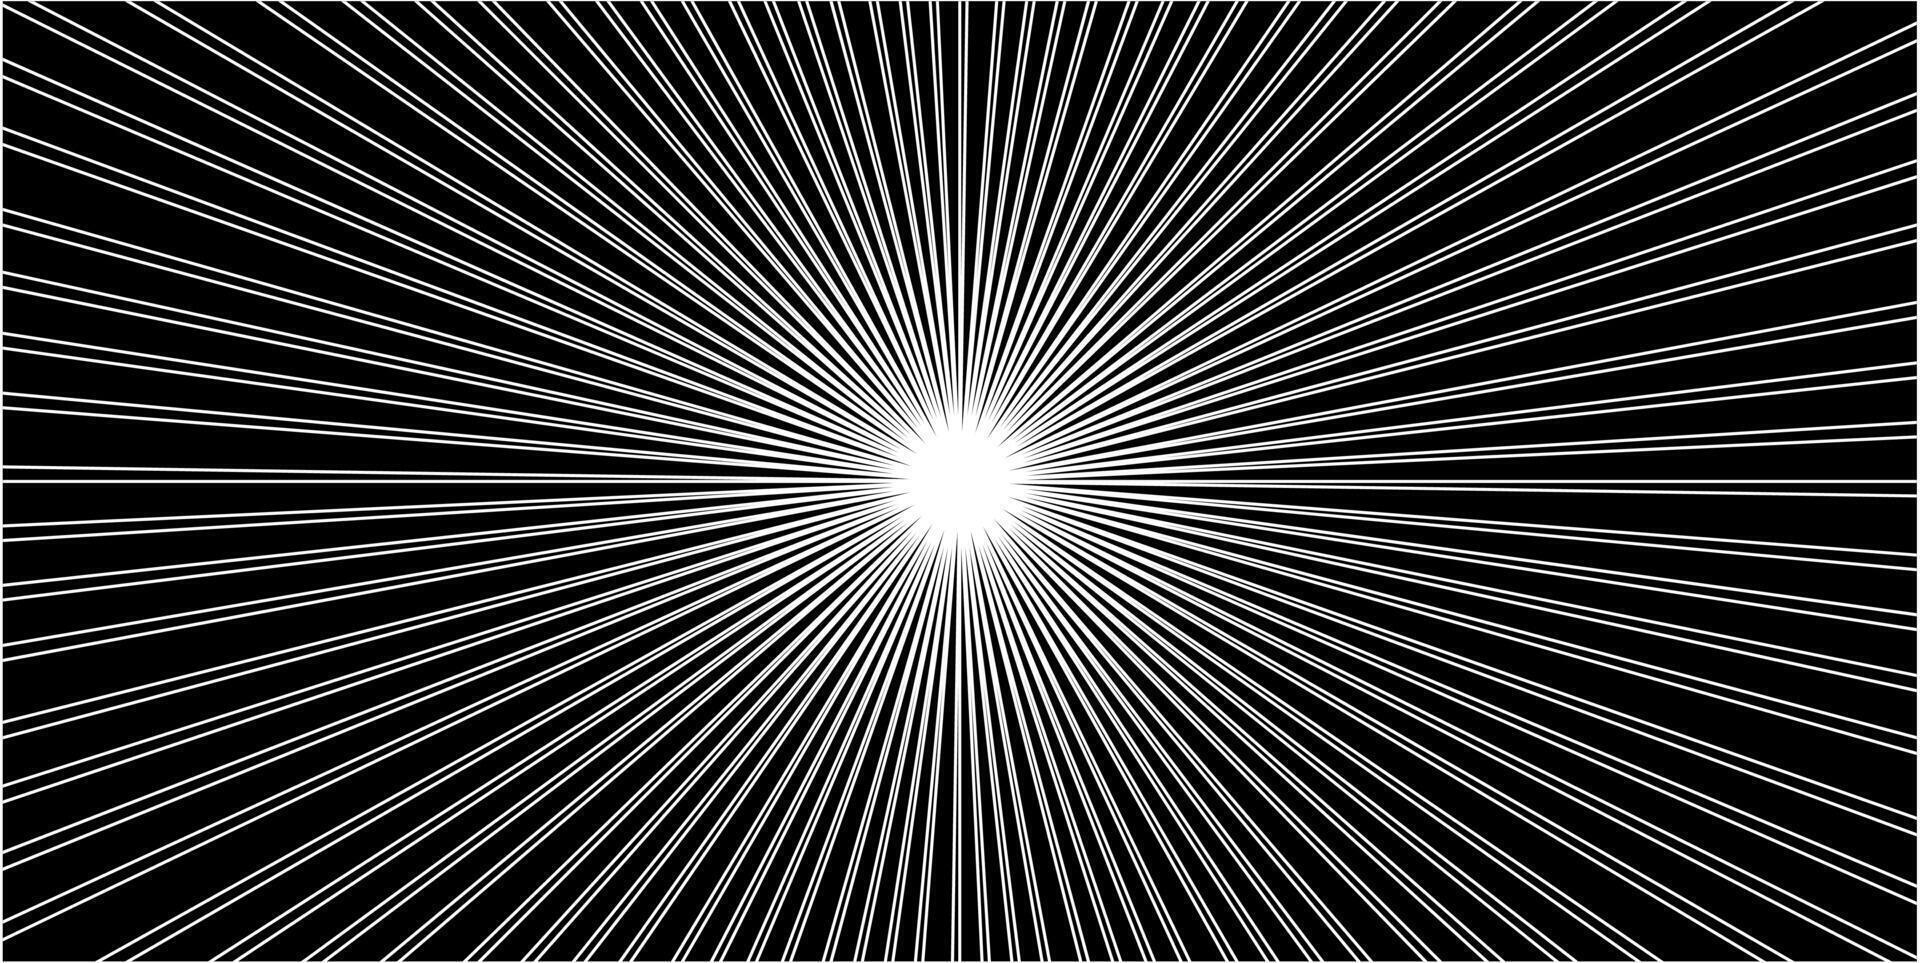 Black sharp line sun rays spark abstract background vector